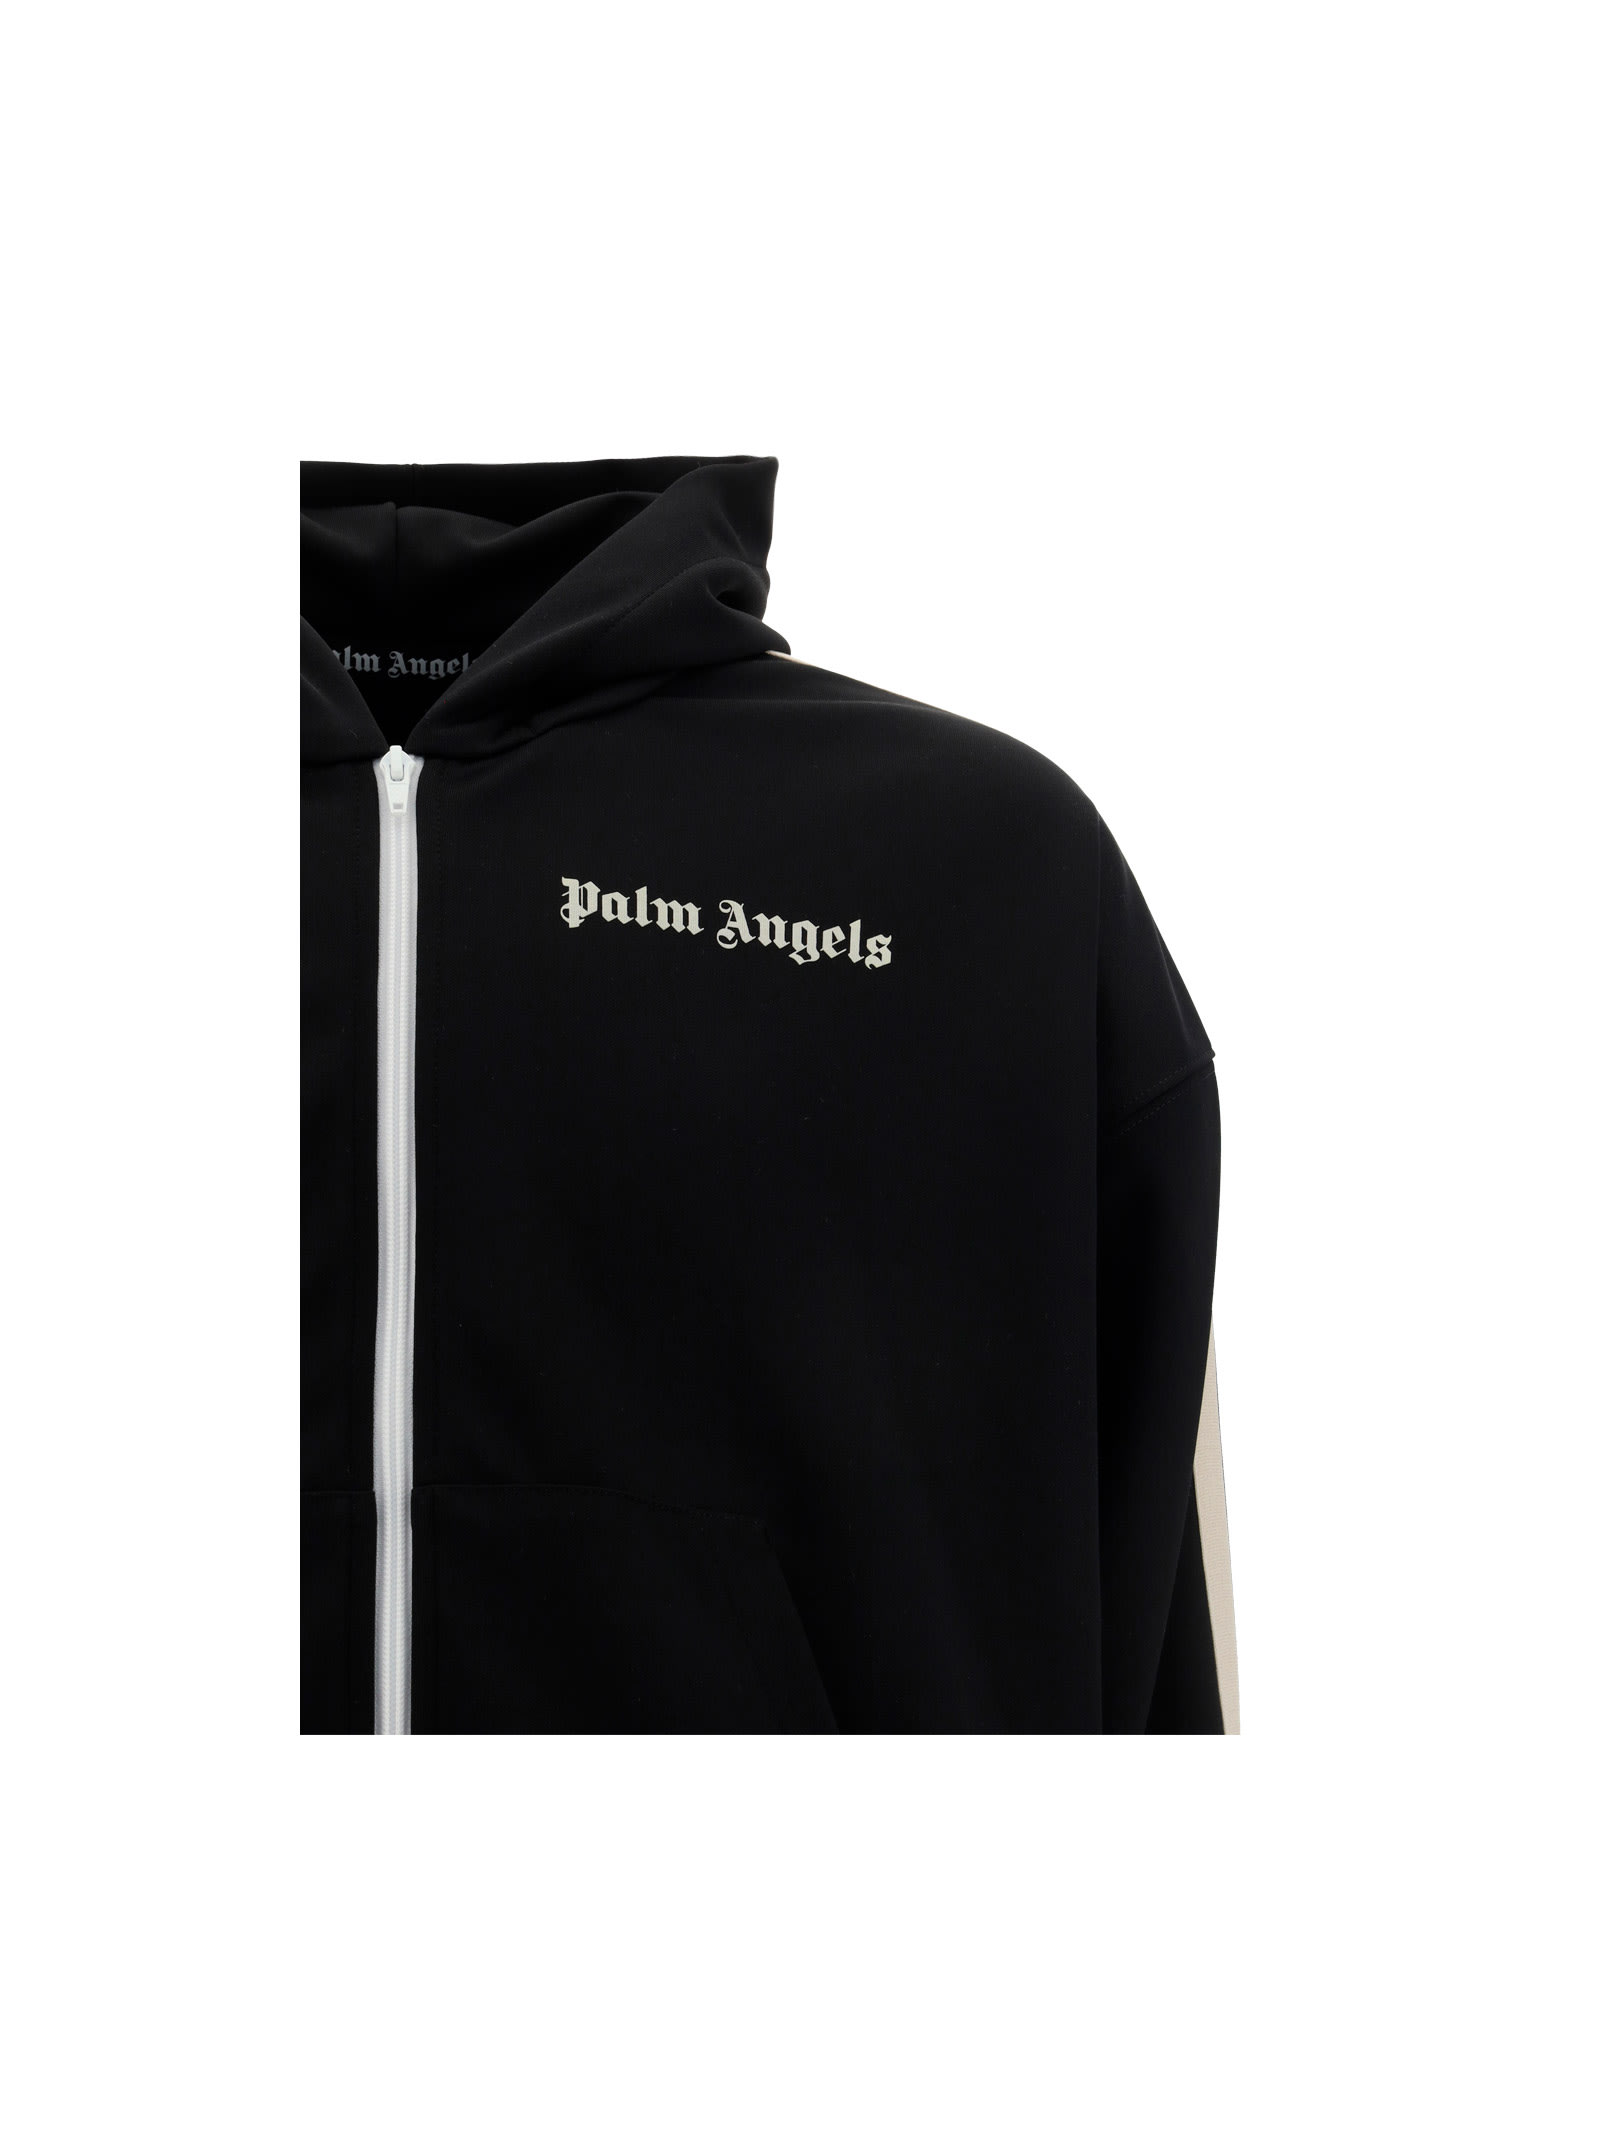 Palm Angels Jacquard Damier Classic Track Jacket in Black for Men